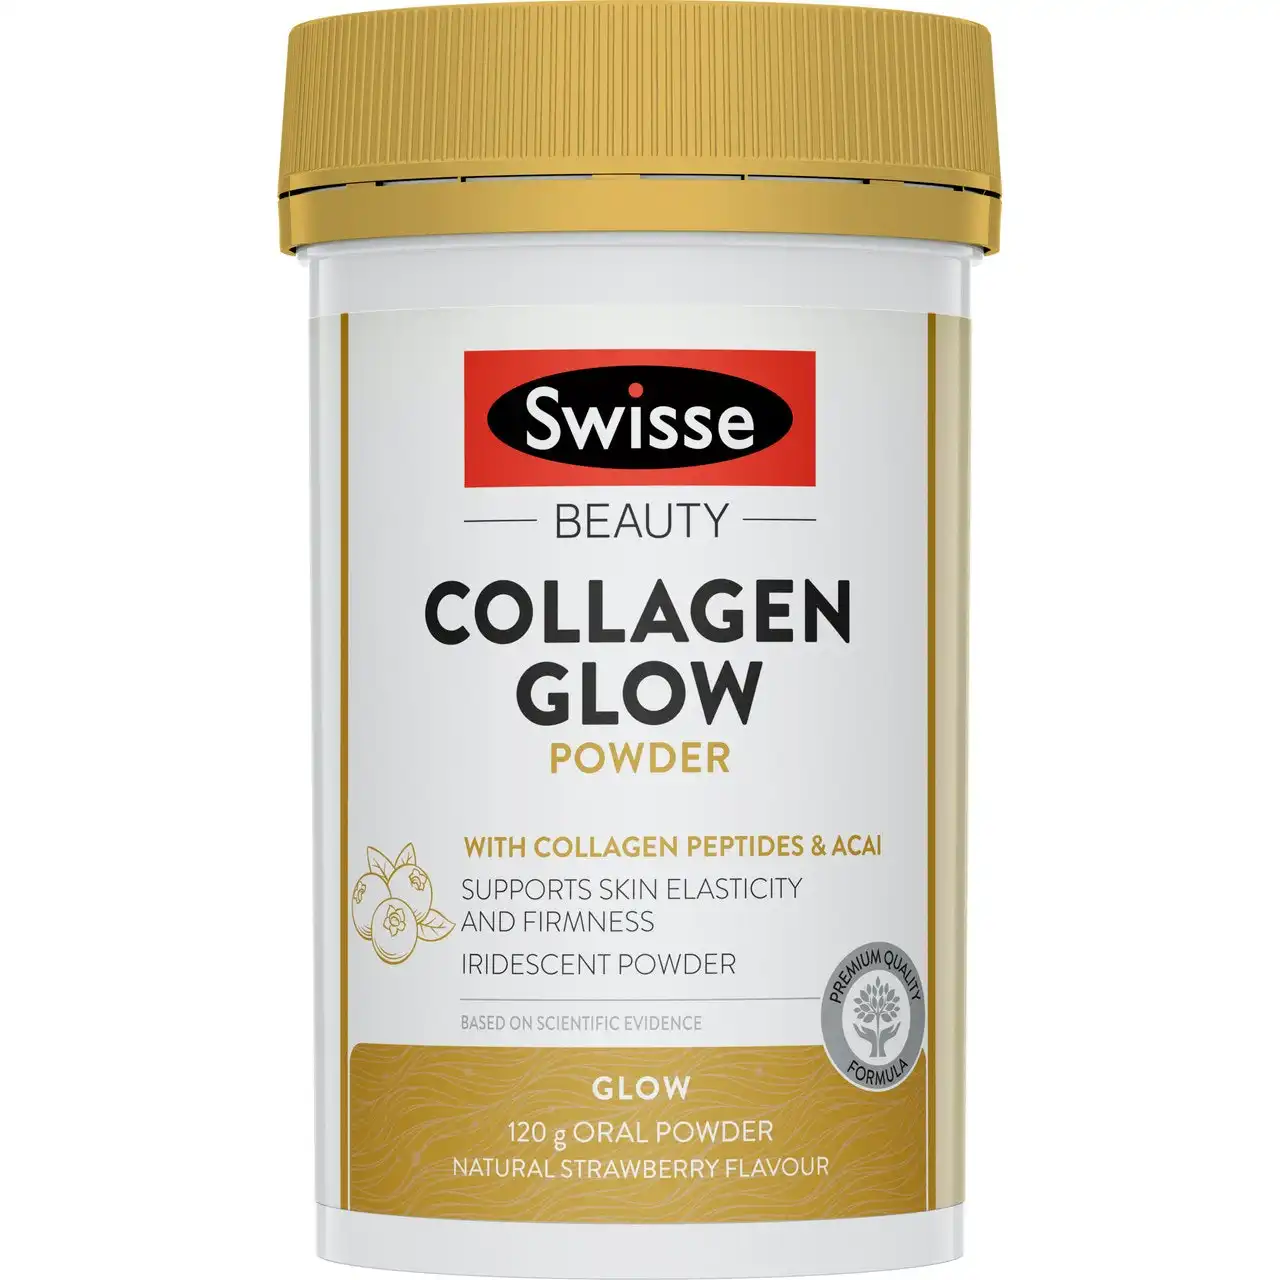 Swisse Beauty Collagen Glow Powder 120g Powder